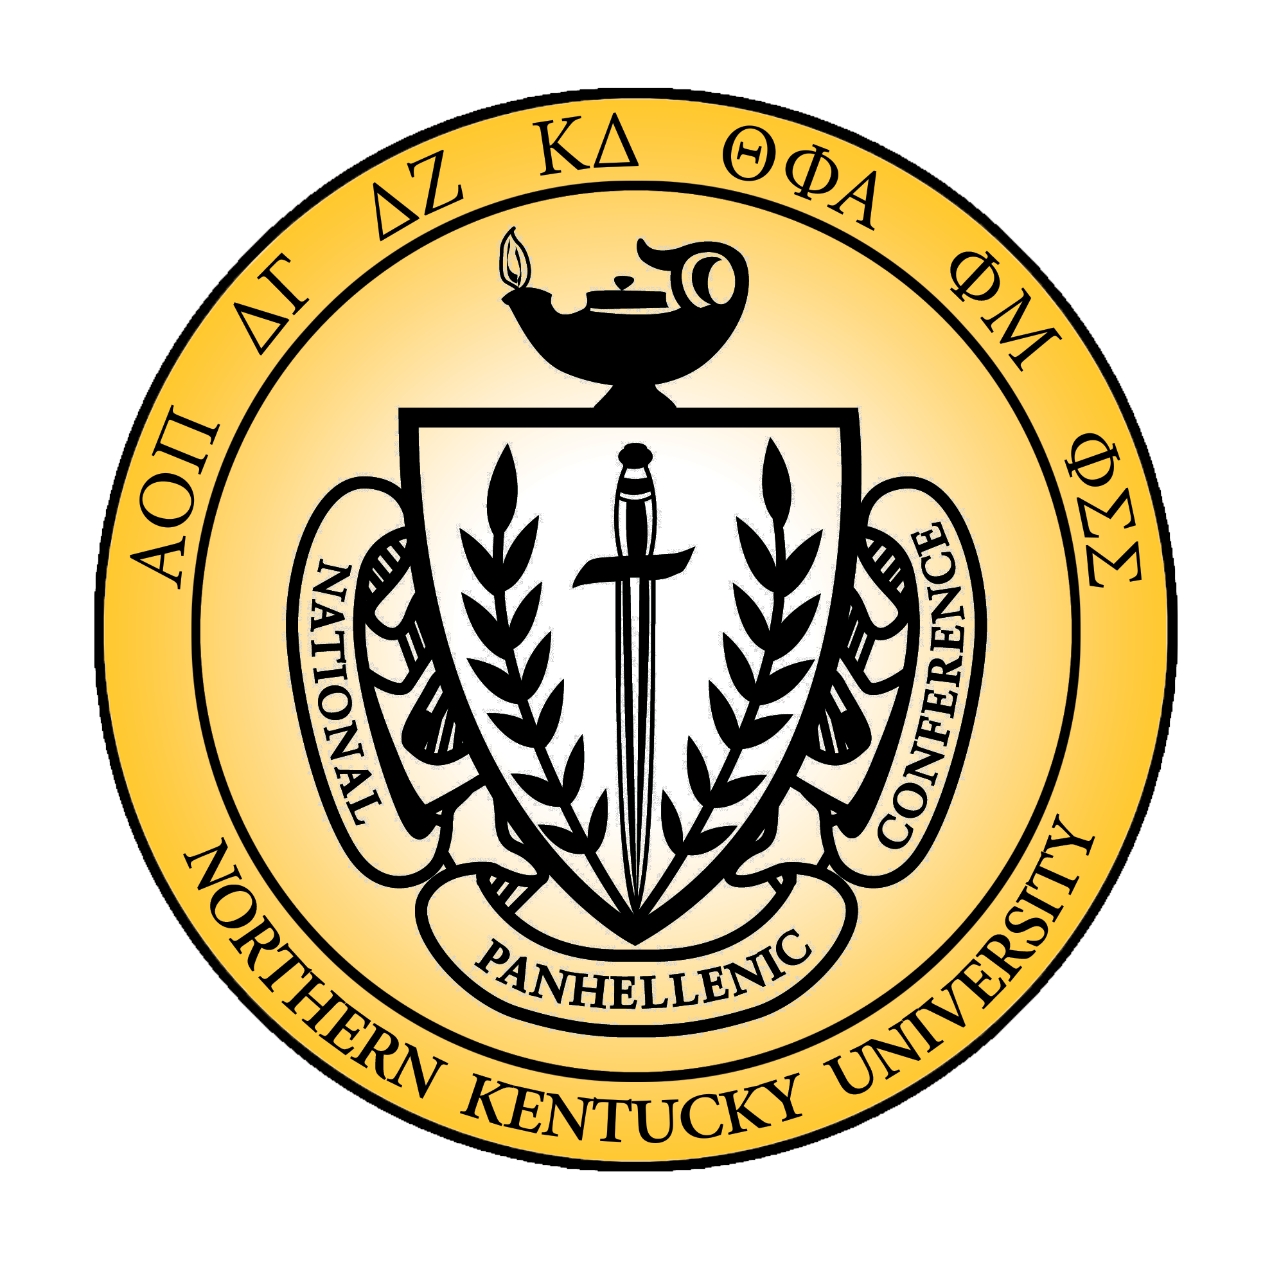 Panhellenic Council logo